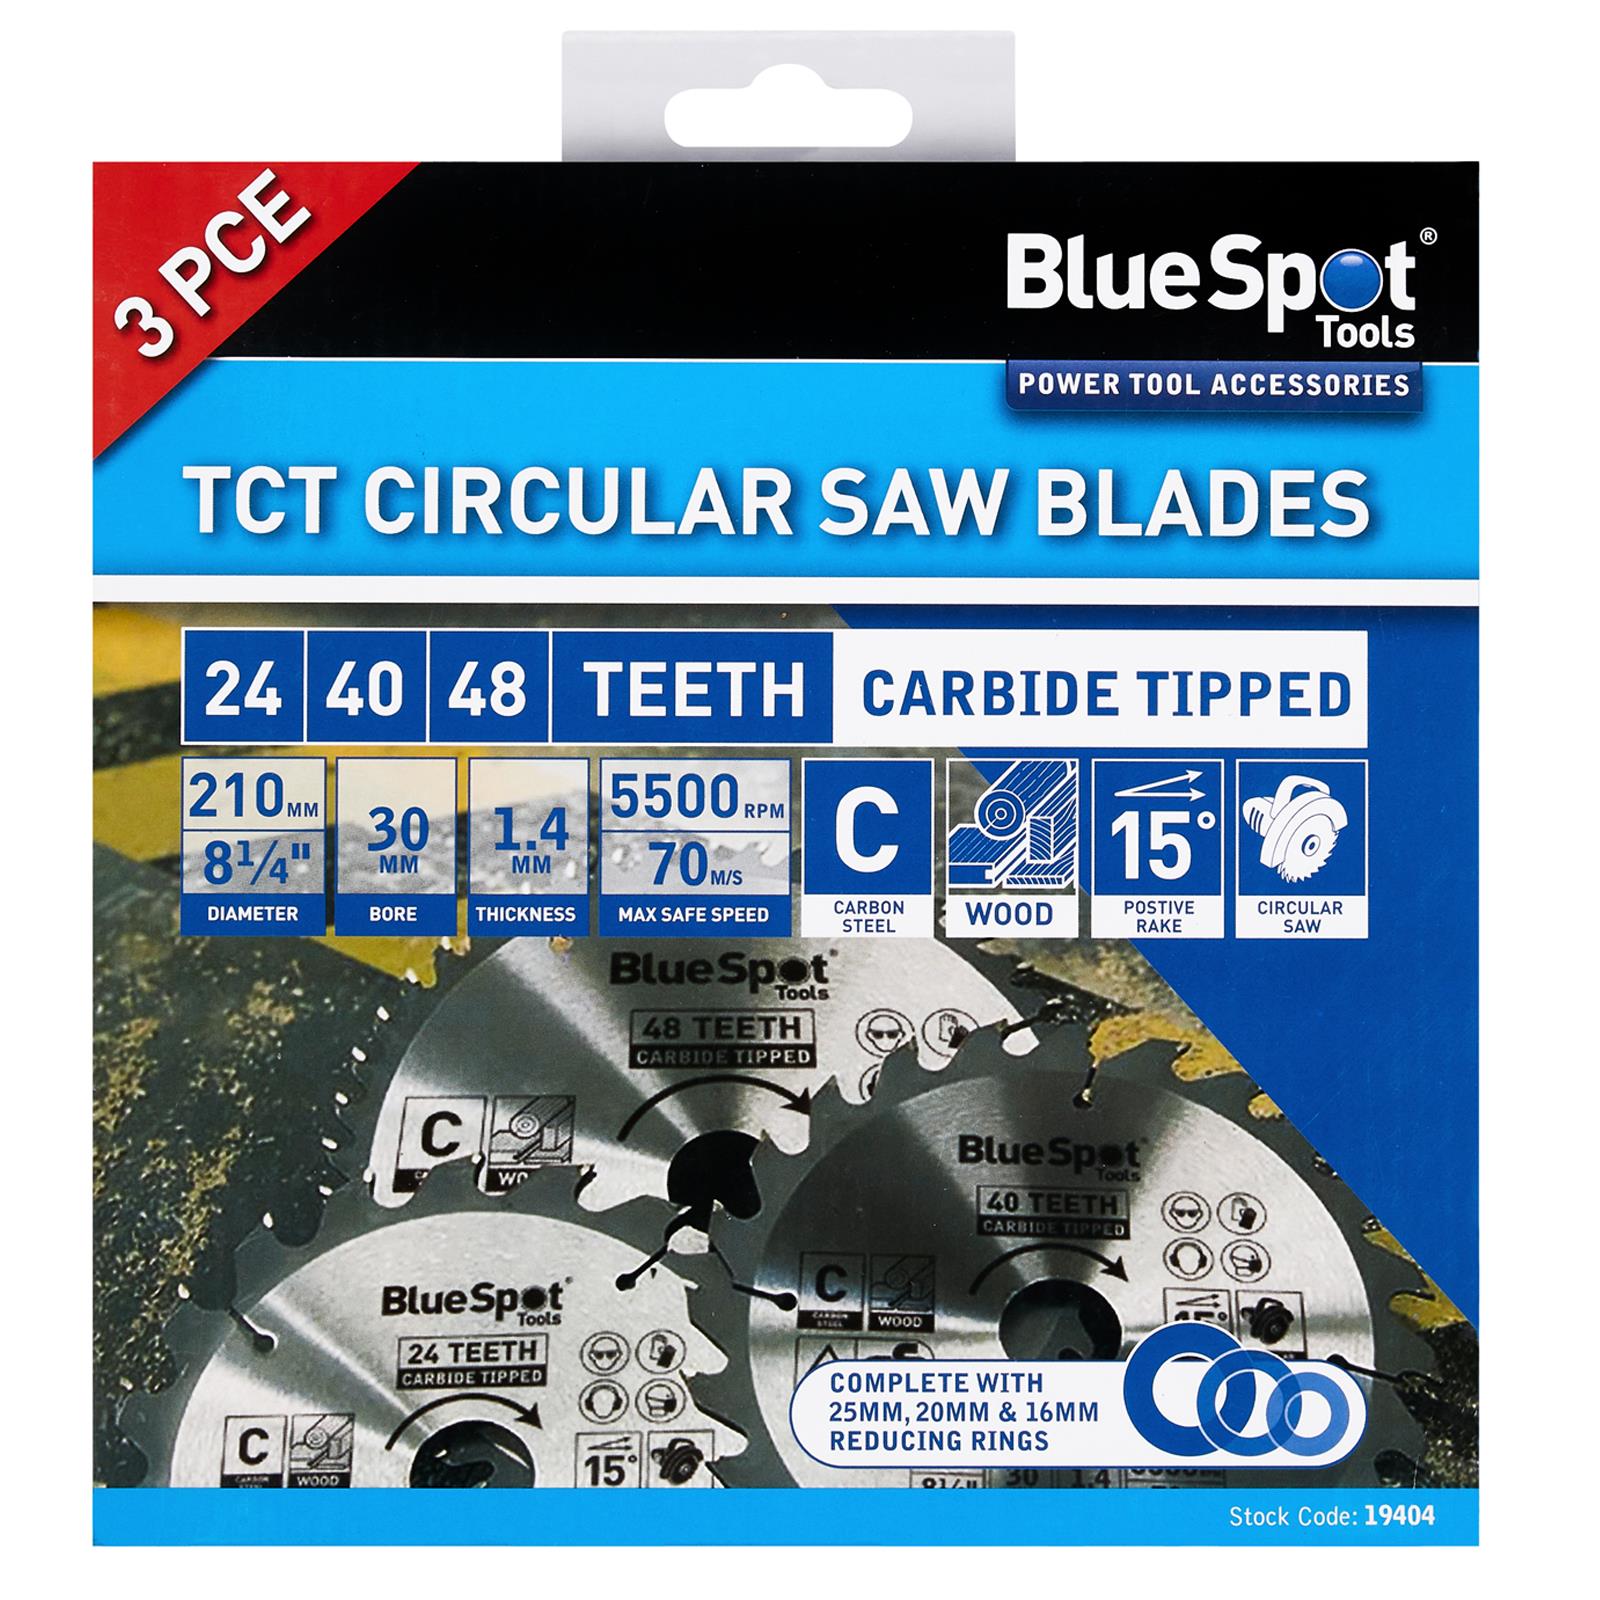 BlueSpot TCT Circular Saw Blades 24 40 48 Teeth 210mm x 30mm 3 Piece